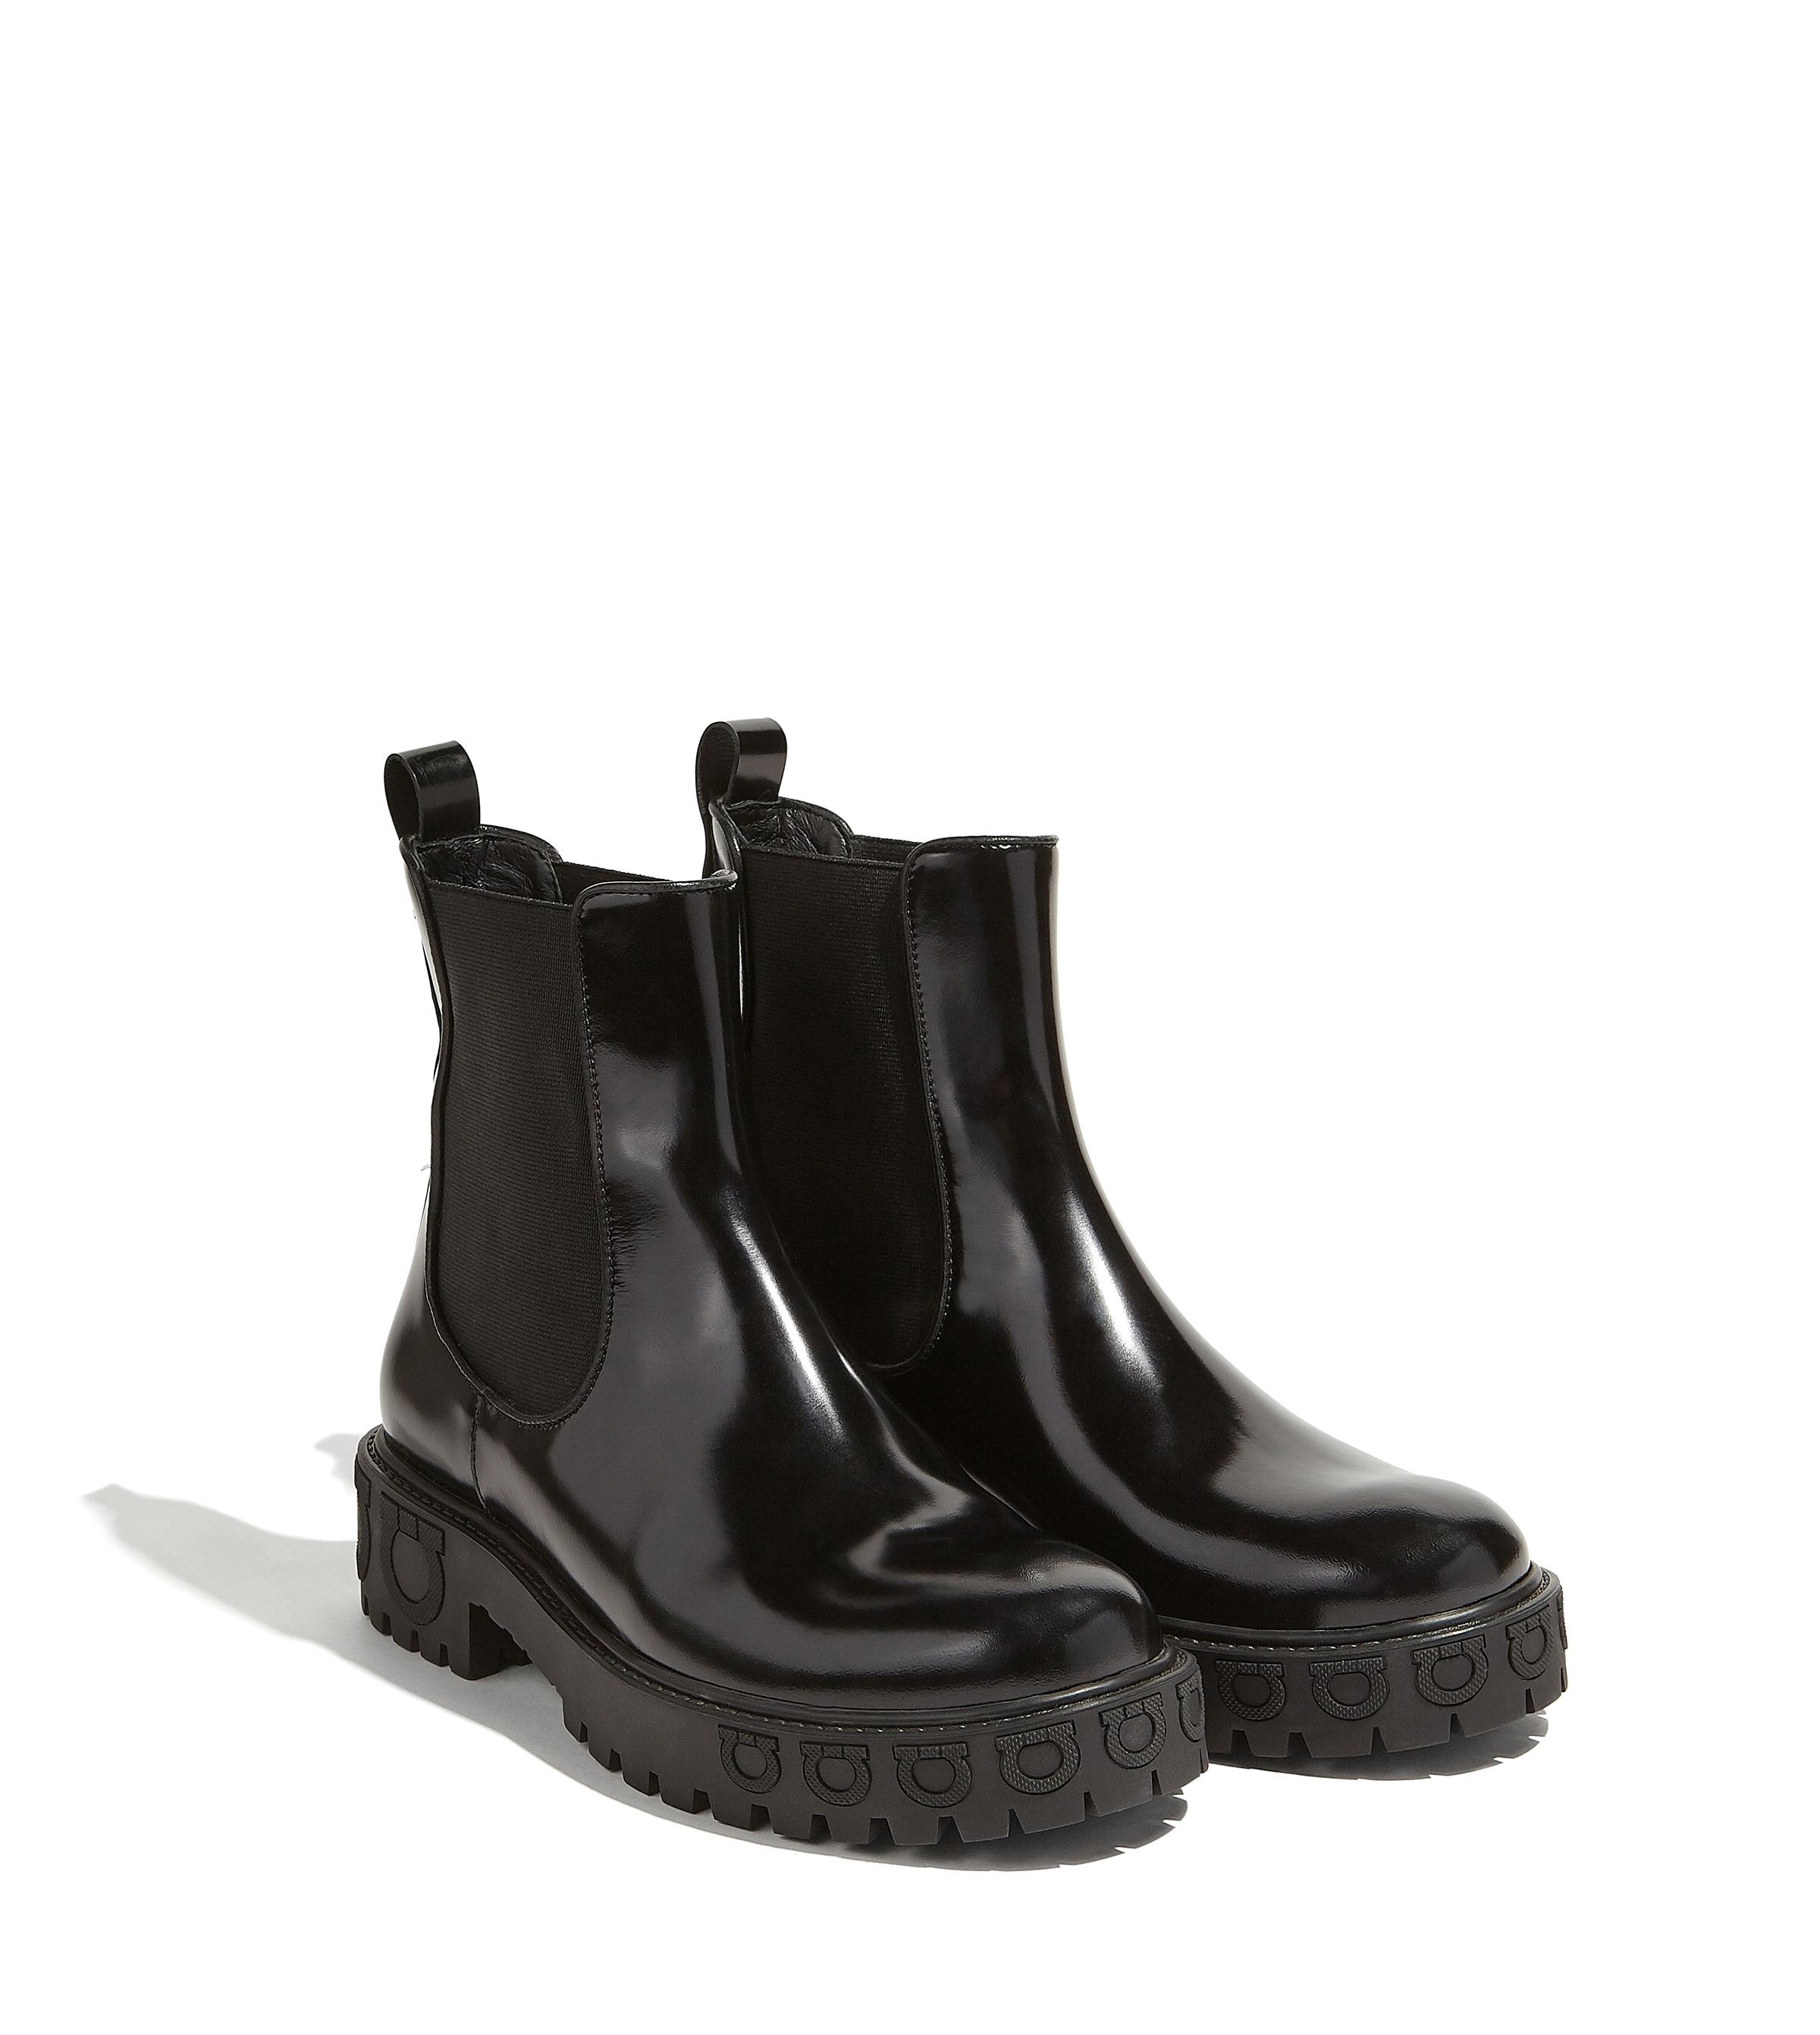 Ferragamo Gancini Patent Leather Boots in Black | Lyst